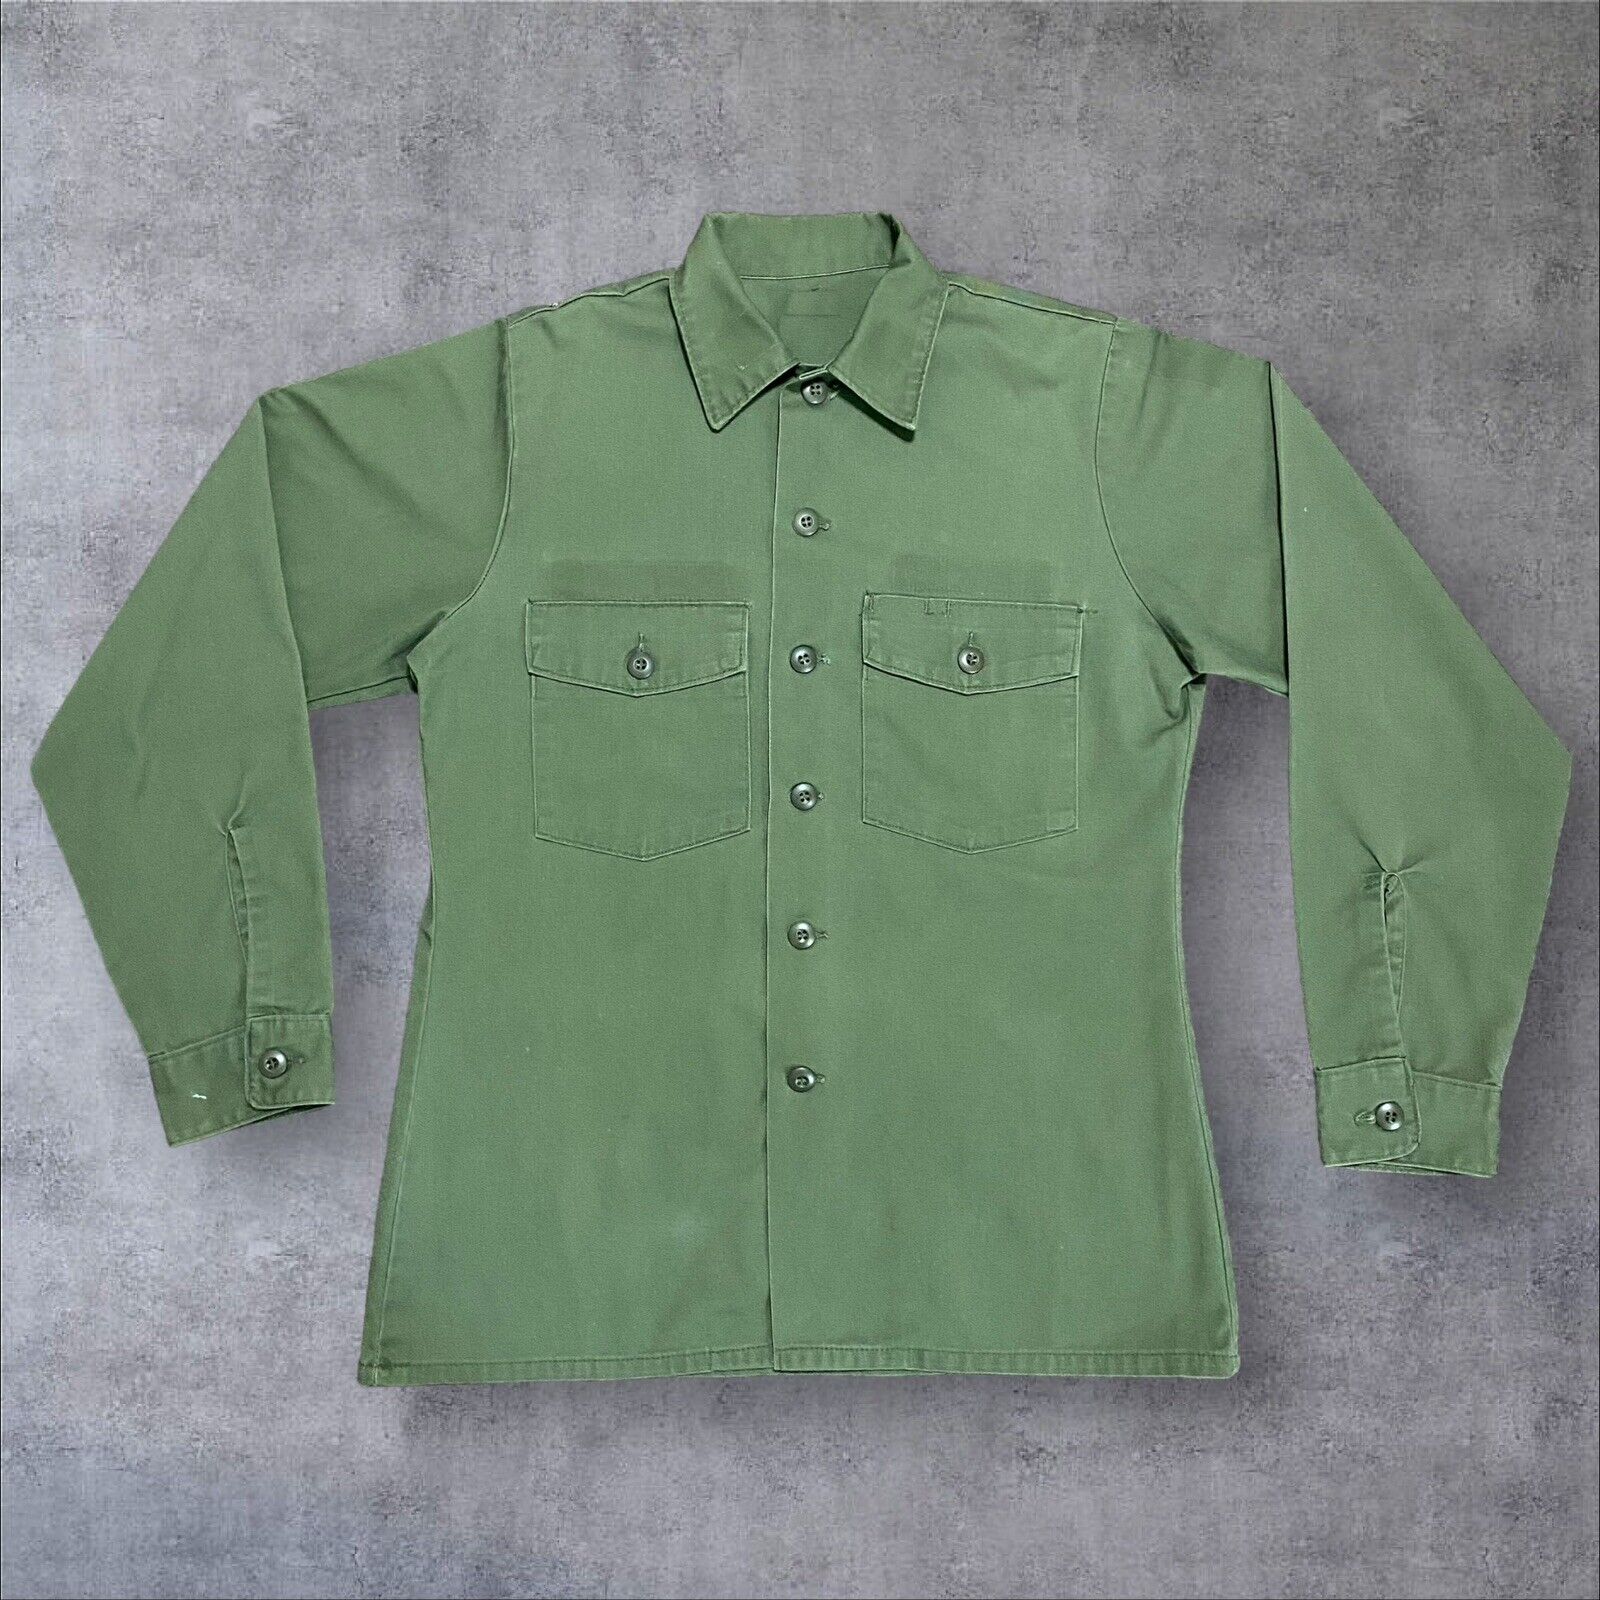 Vintage US Army Military OG-507 Men’s Utility Shirt Poly/Cotton Durable Press